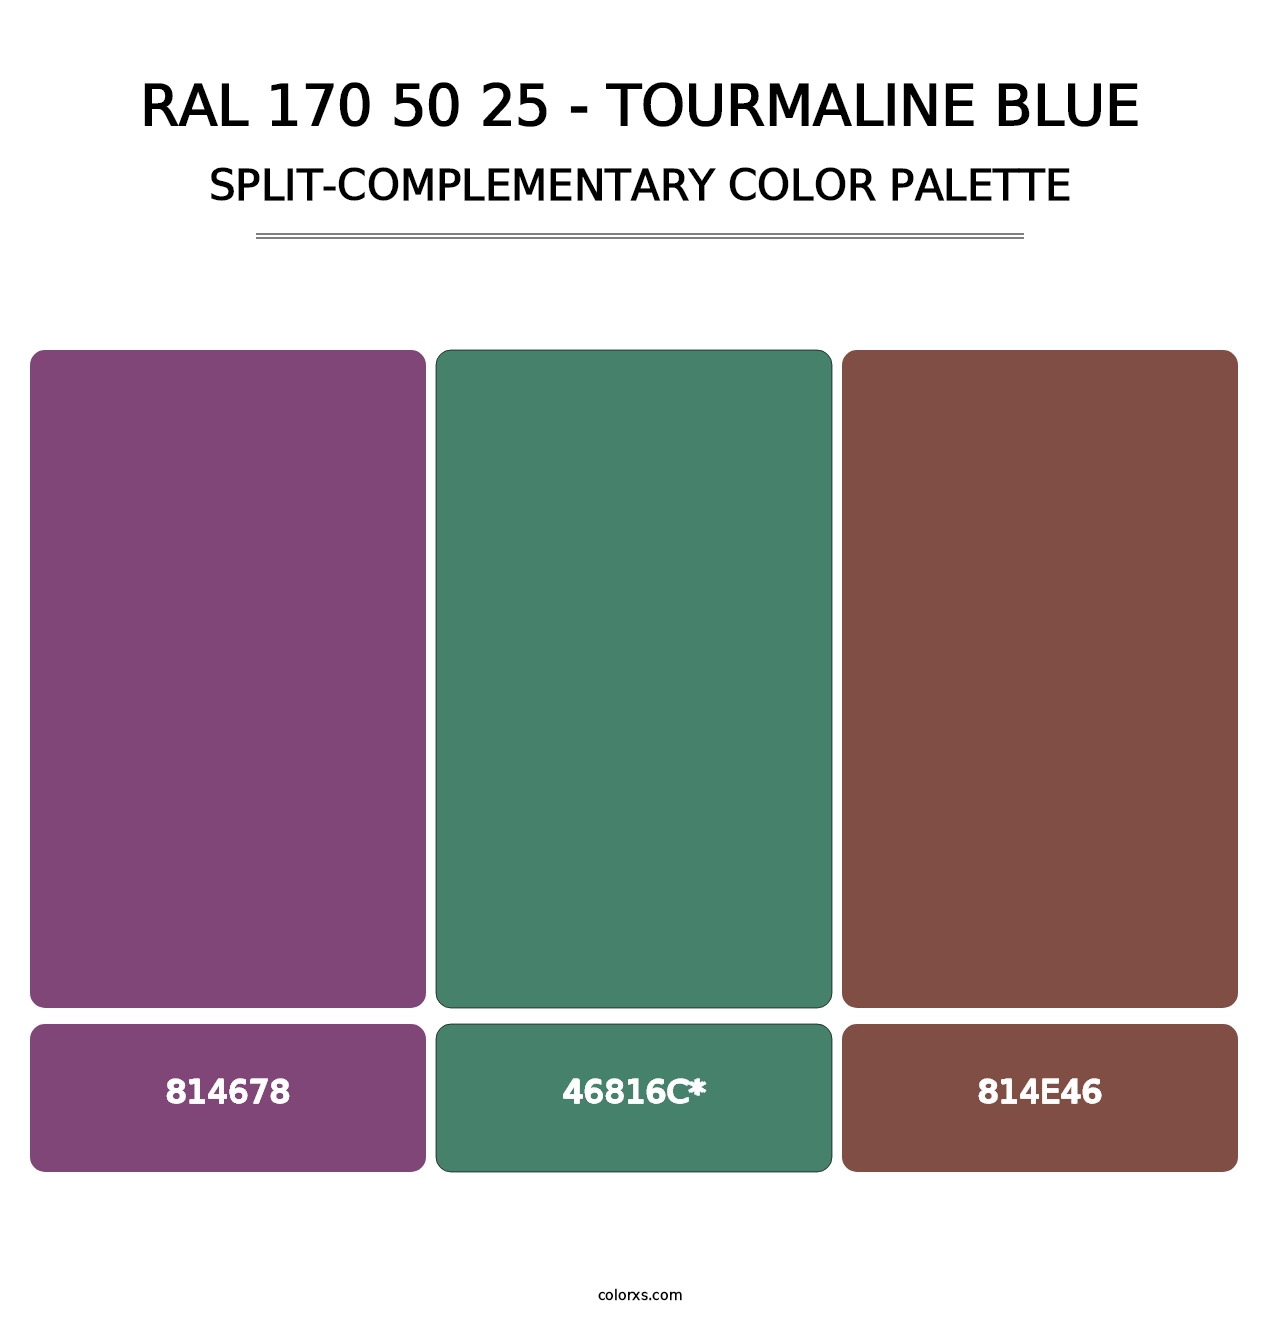 RAL 170 50 25 - Tourmaline Blue - Split-Complementary Color Palette